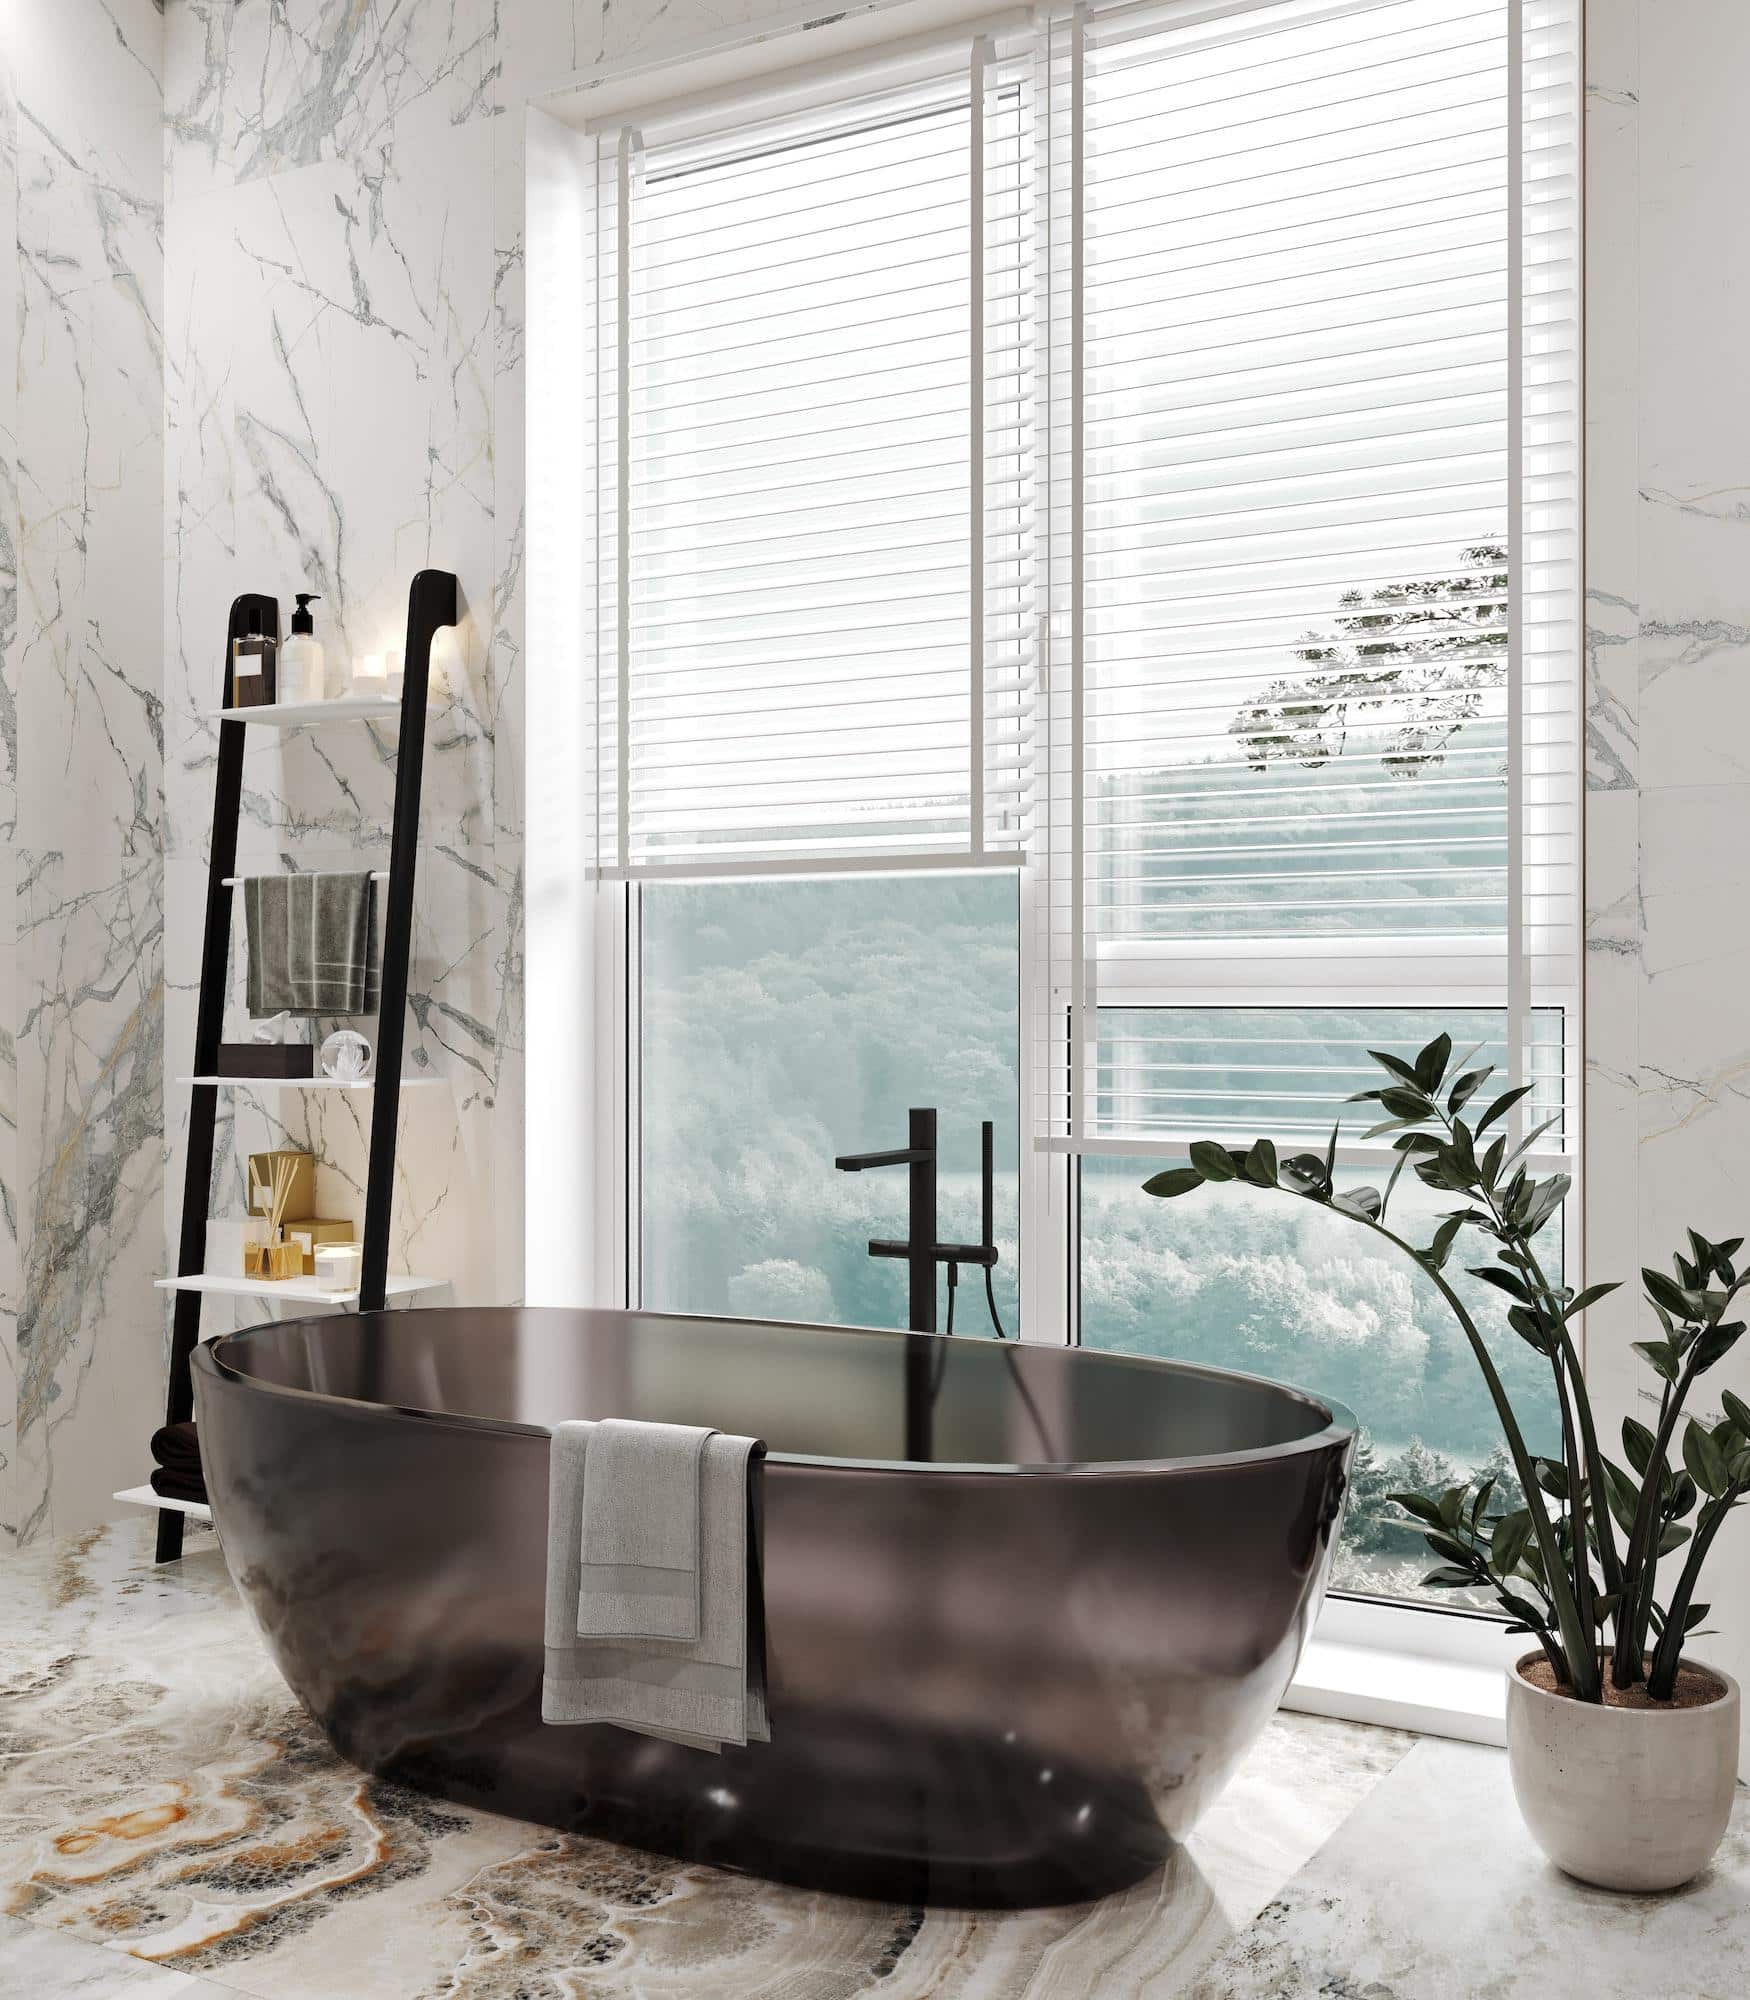 Luxury modern home bathroom interior with glass bathtub, shelf, plant and window